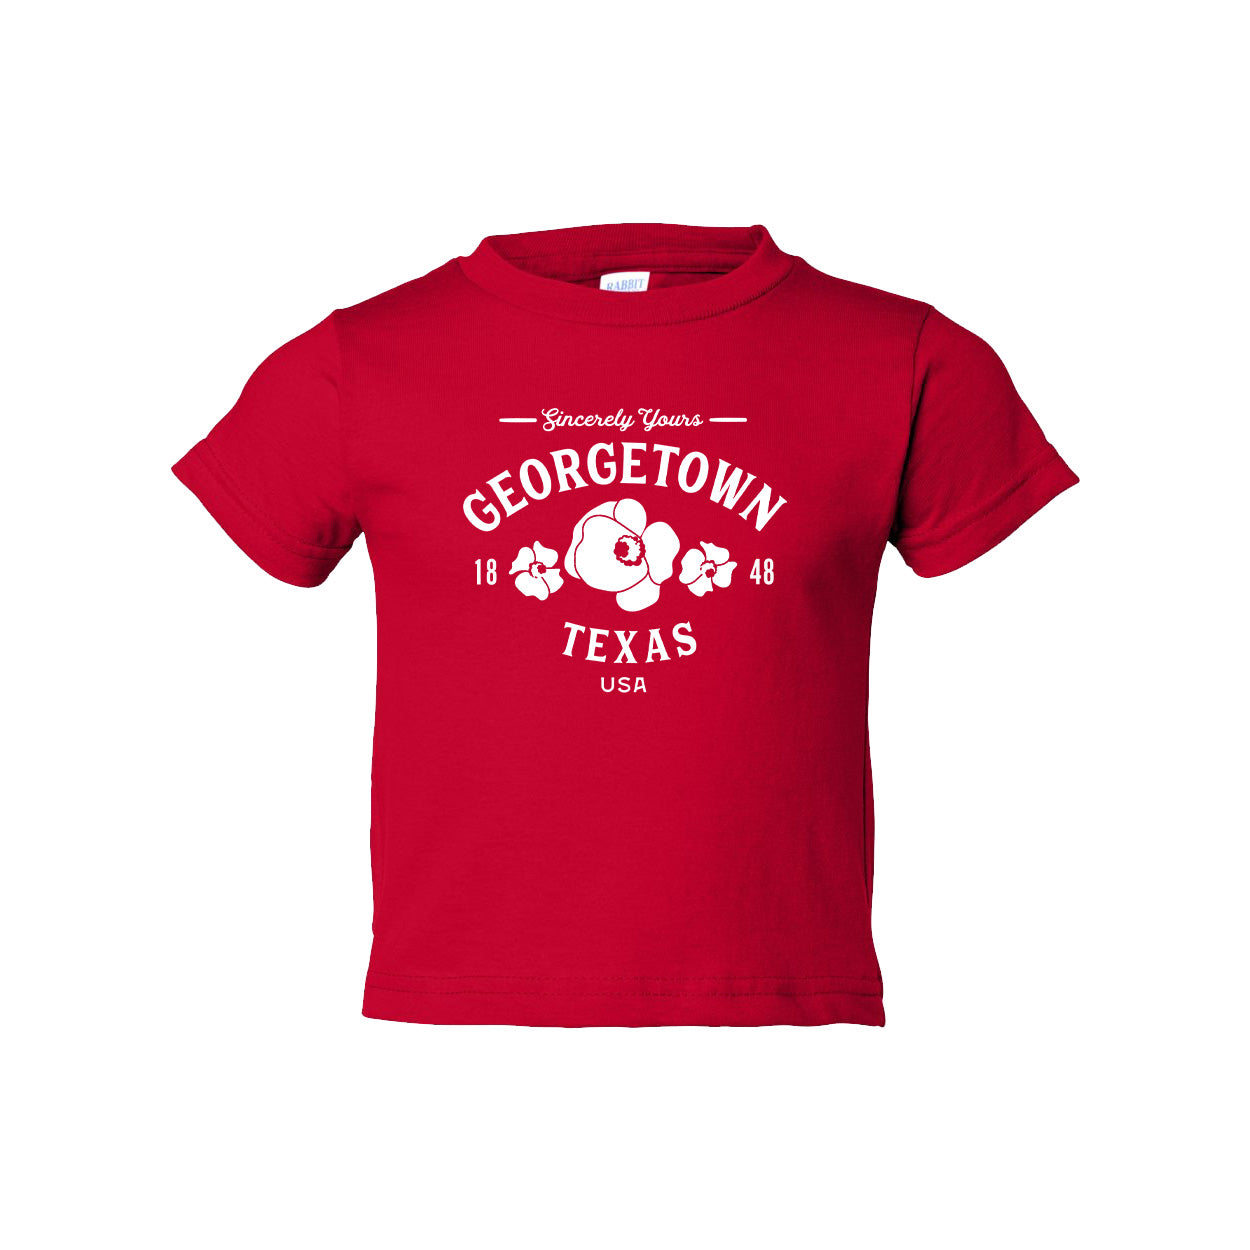 Georgetown Texas Toddler T-shirt - Poppies